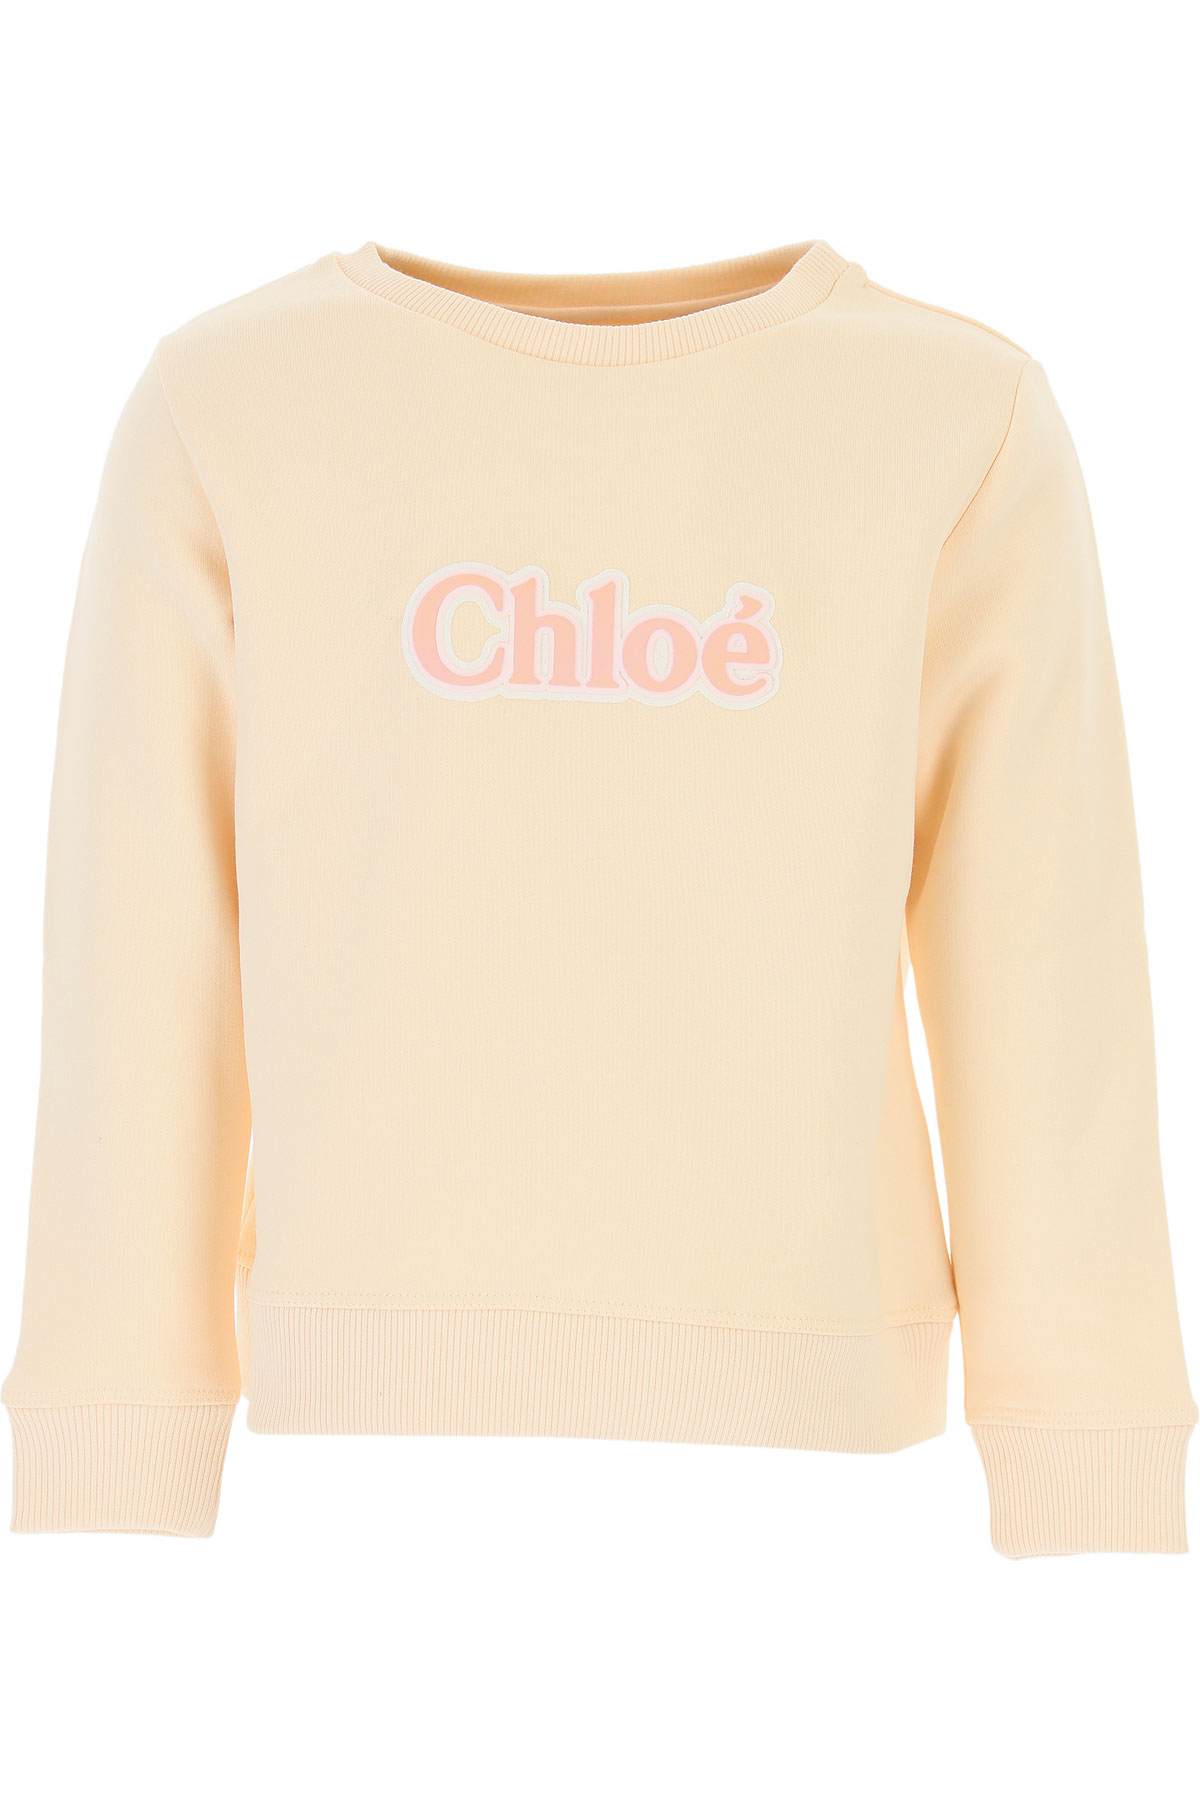 Chloe Kinder Sweatshirt & Kapuzenpullover für Mädchen Günstig im Sale, Helles blasses Pink, Baumwolle, 2017, 10Y 6Y 8Y